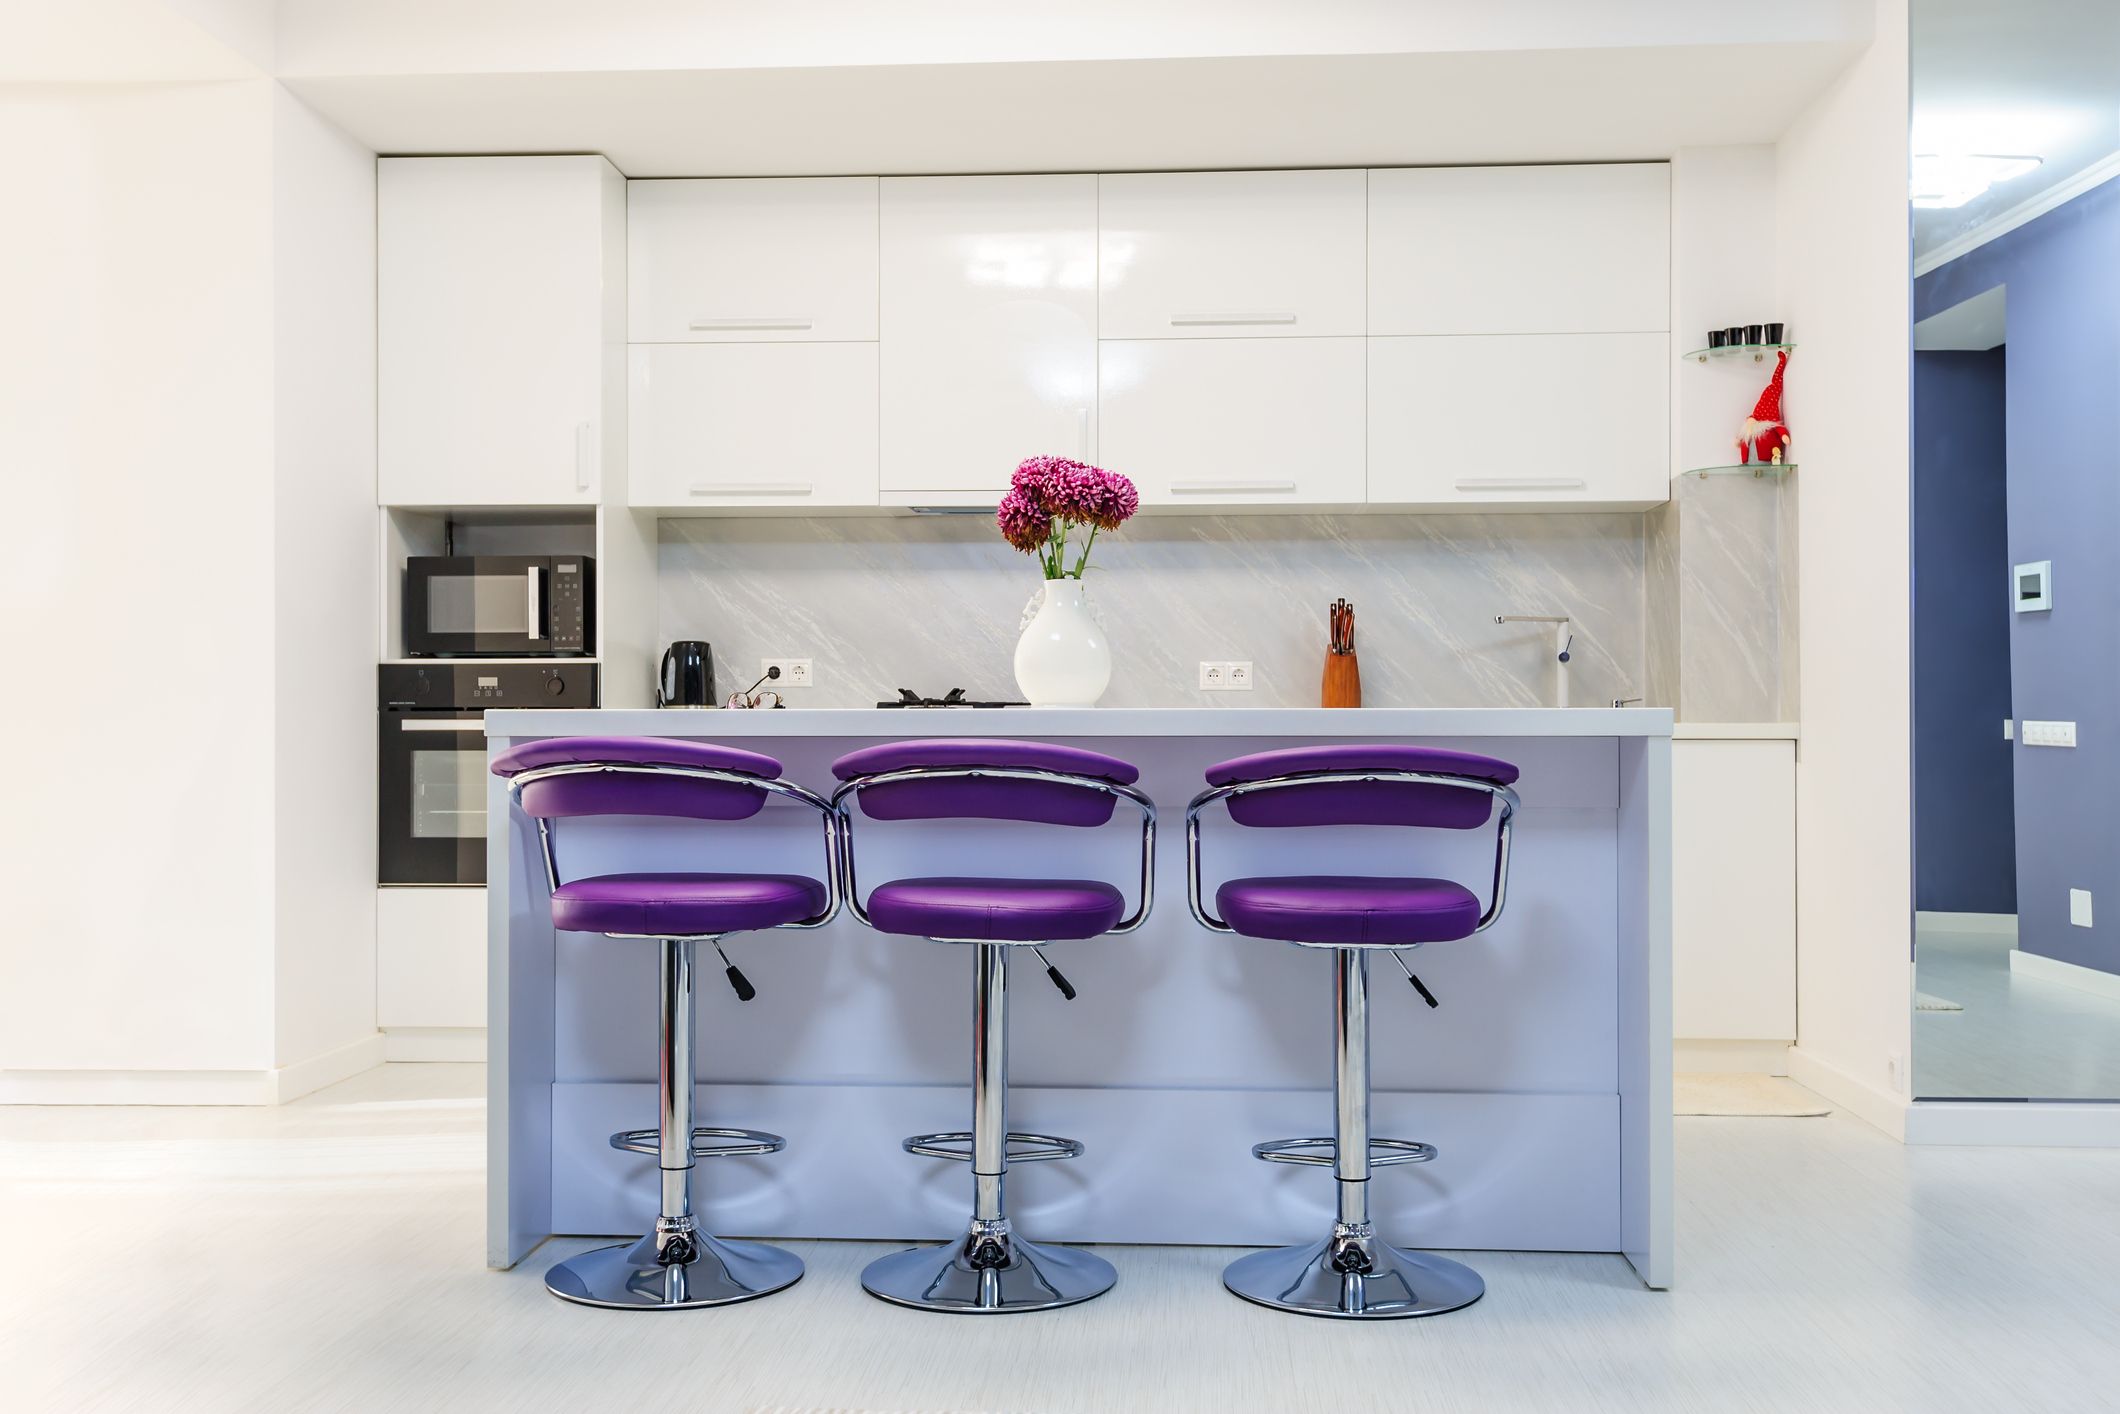 Purple Kitchen Accessories ! - I Creative Ideas